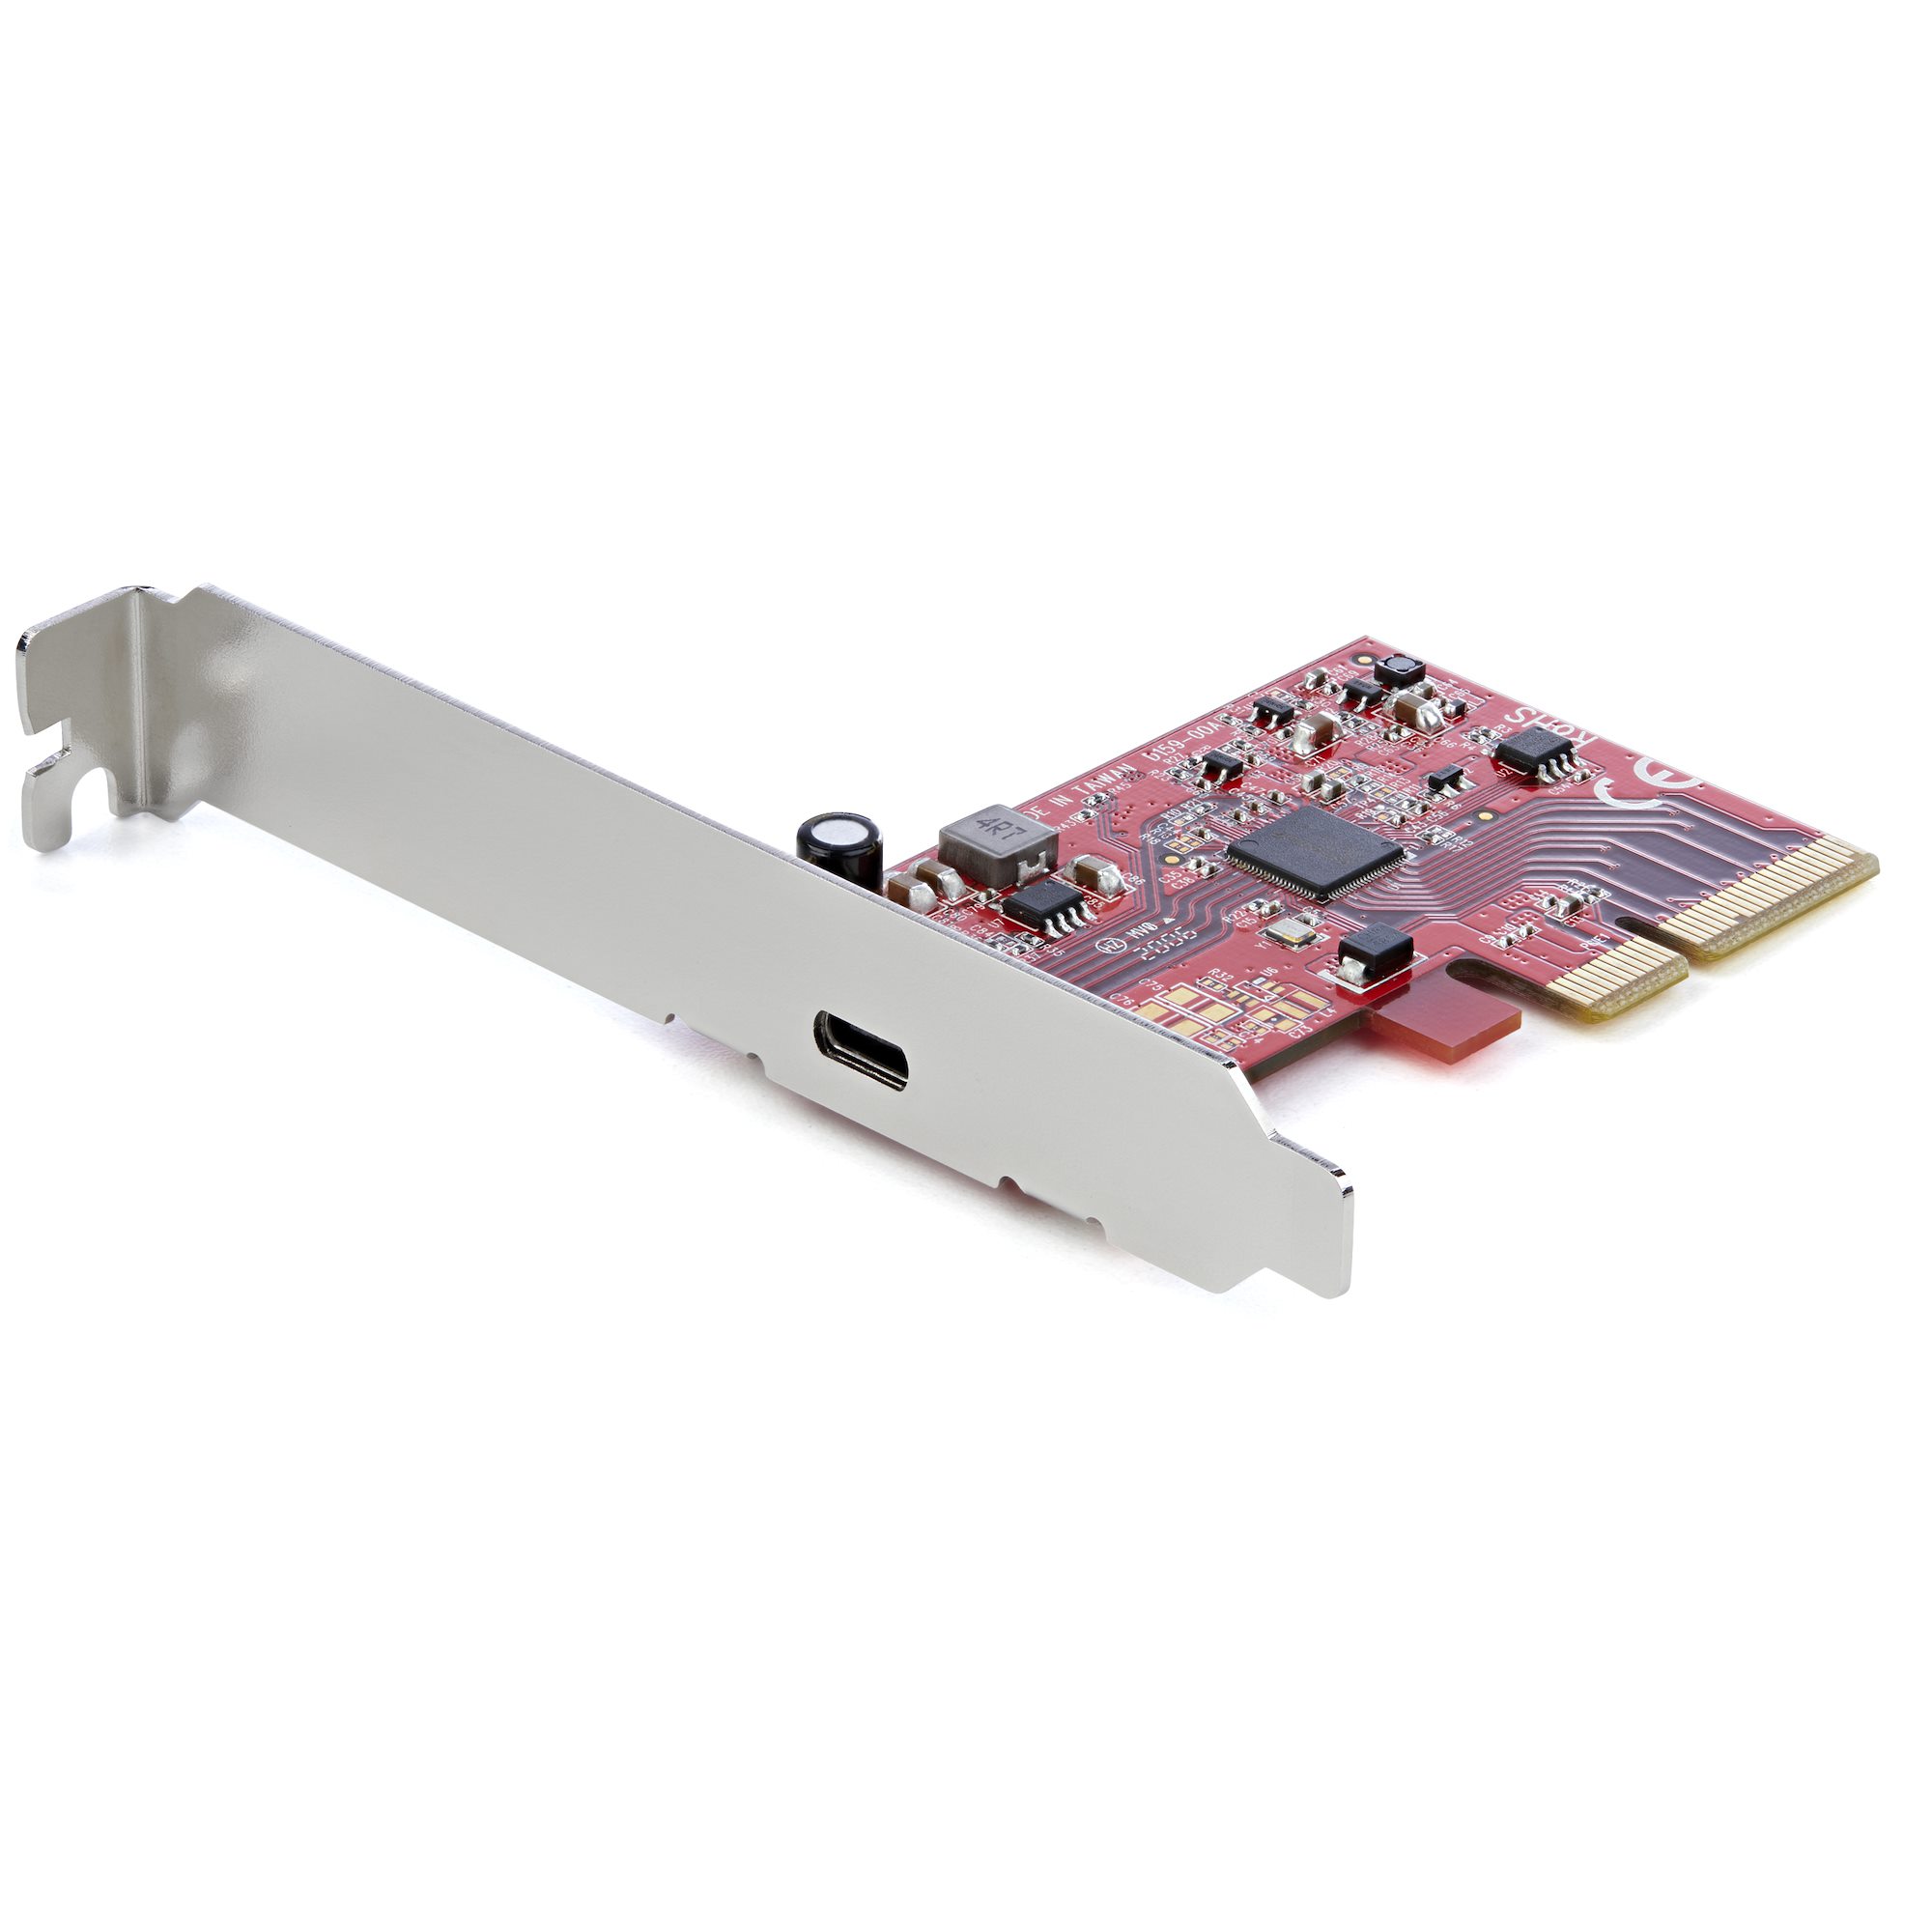 【PEXUSB321C】USB 3.2 GEN 2X2 PCIE CARD